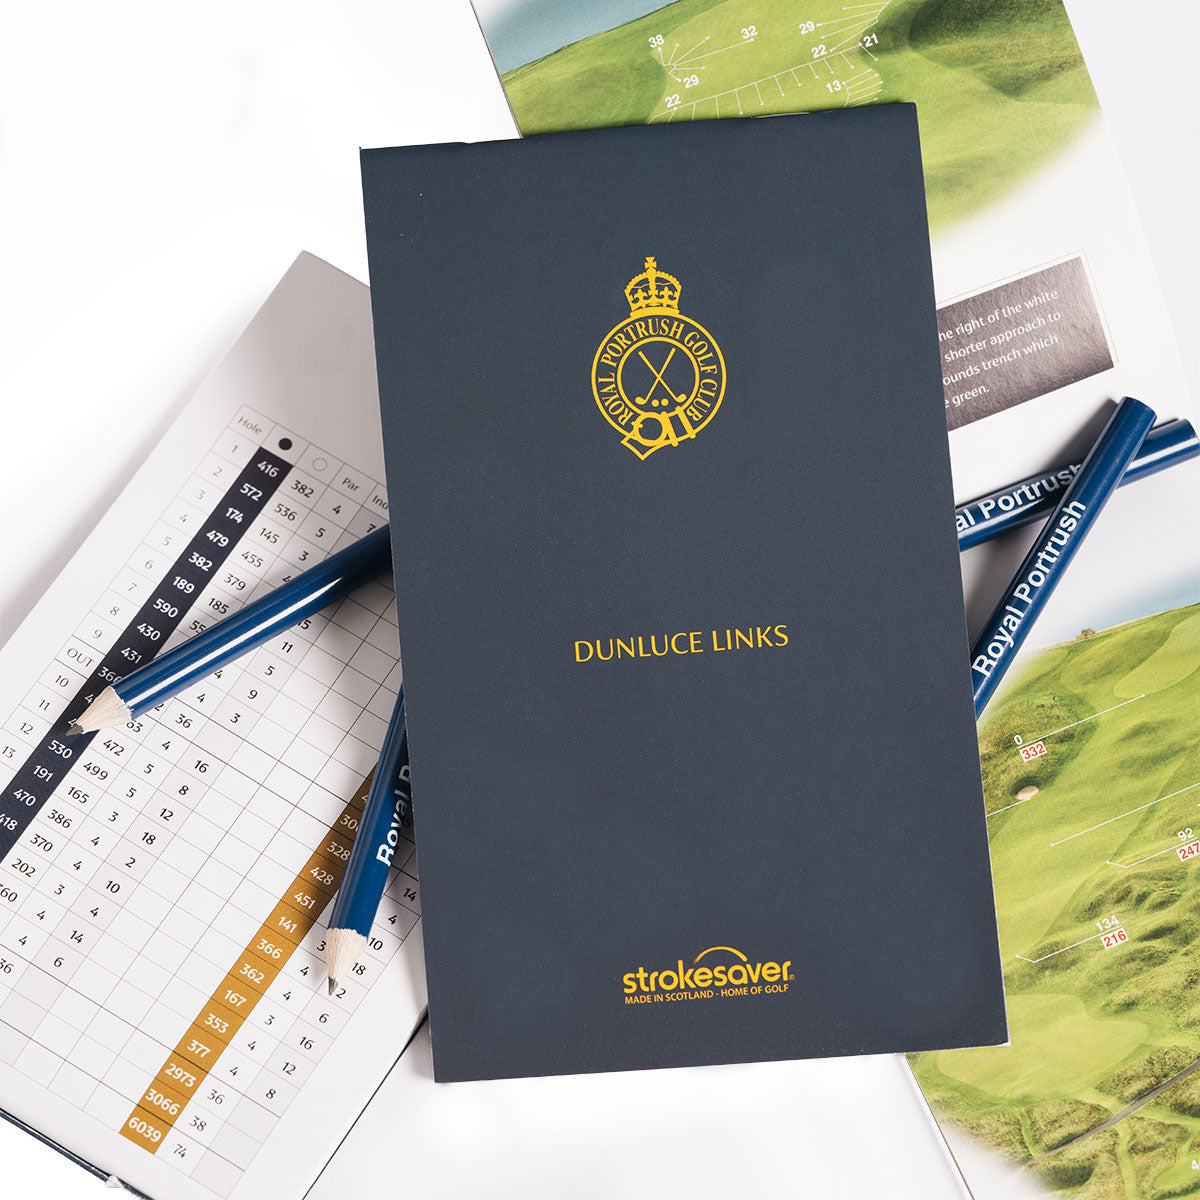 Royal Portrush The Dunluce Links Course Guide